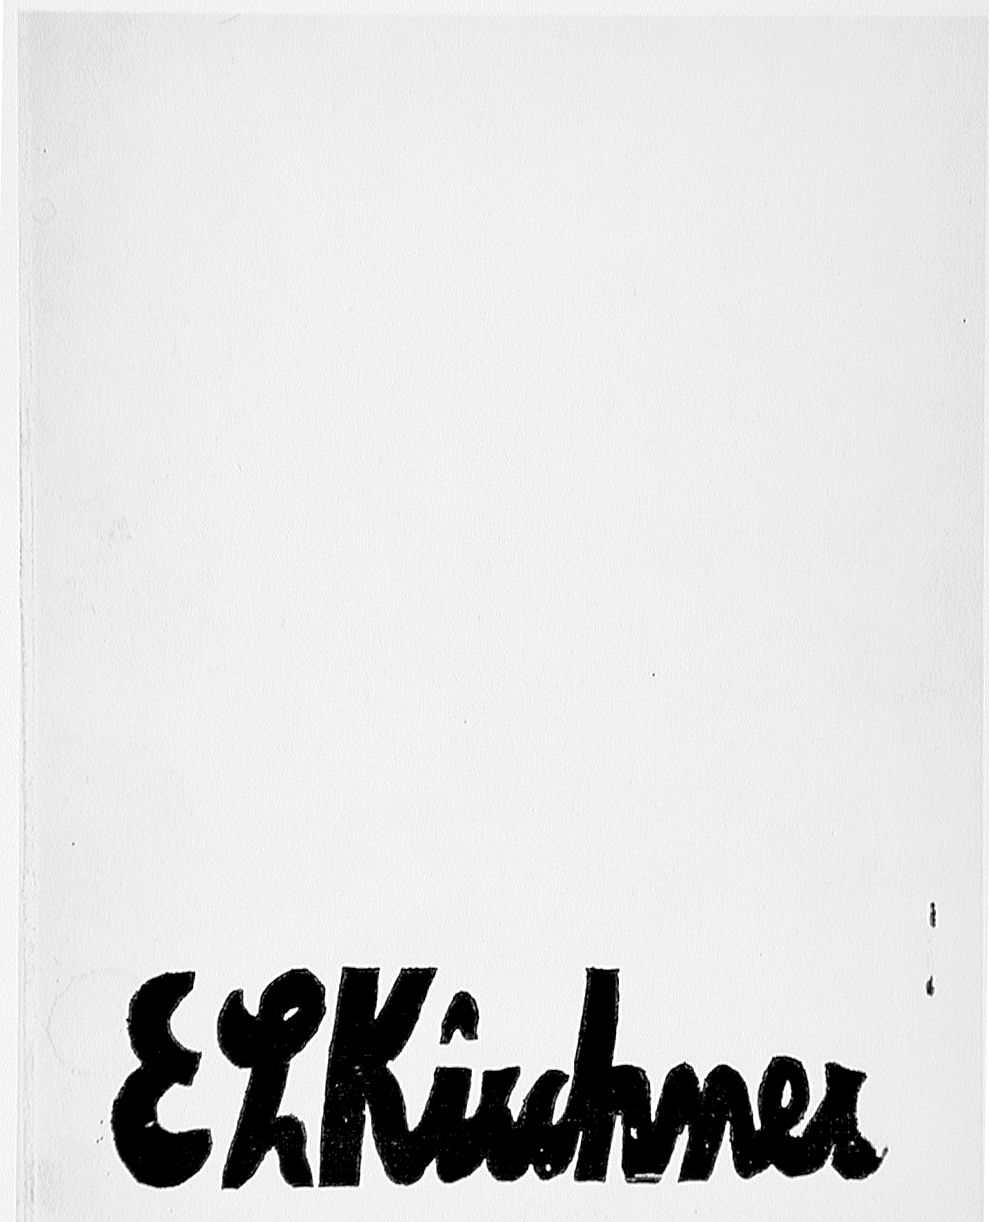 Ernst Ludwig Kirchner exhibition by Ernst Ludwig Kirchner